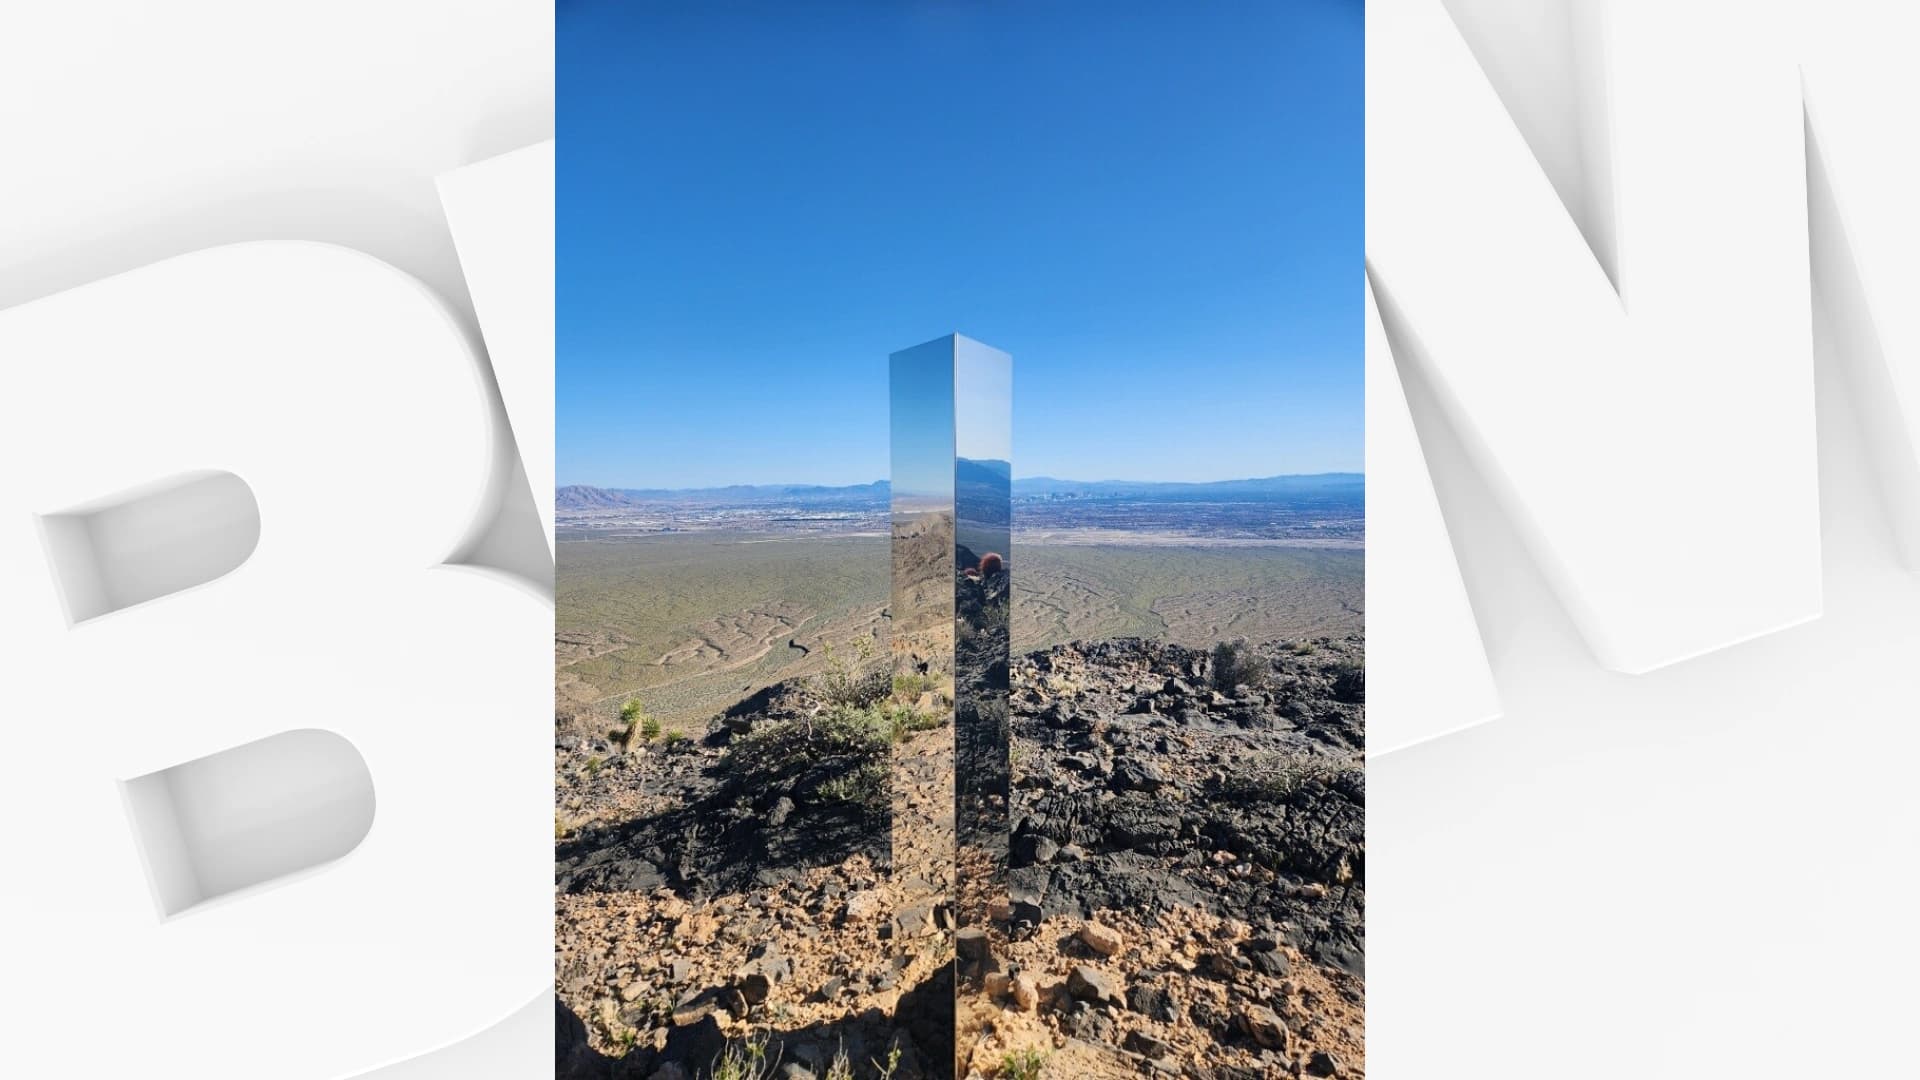 Four years after a strange streak, a mysterious monolith appears near Las Vegas